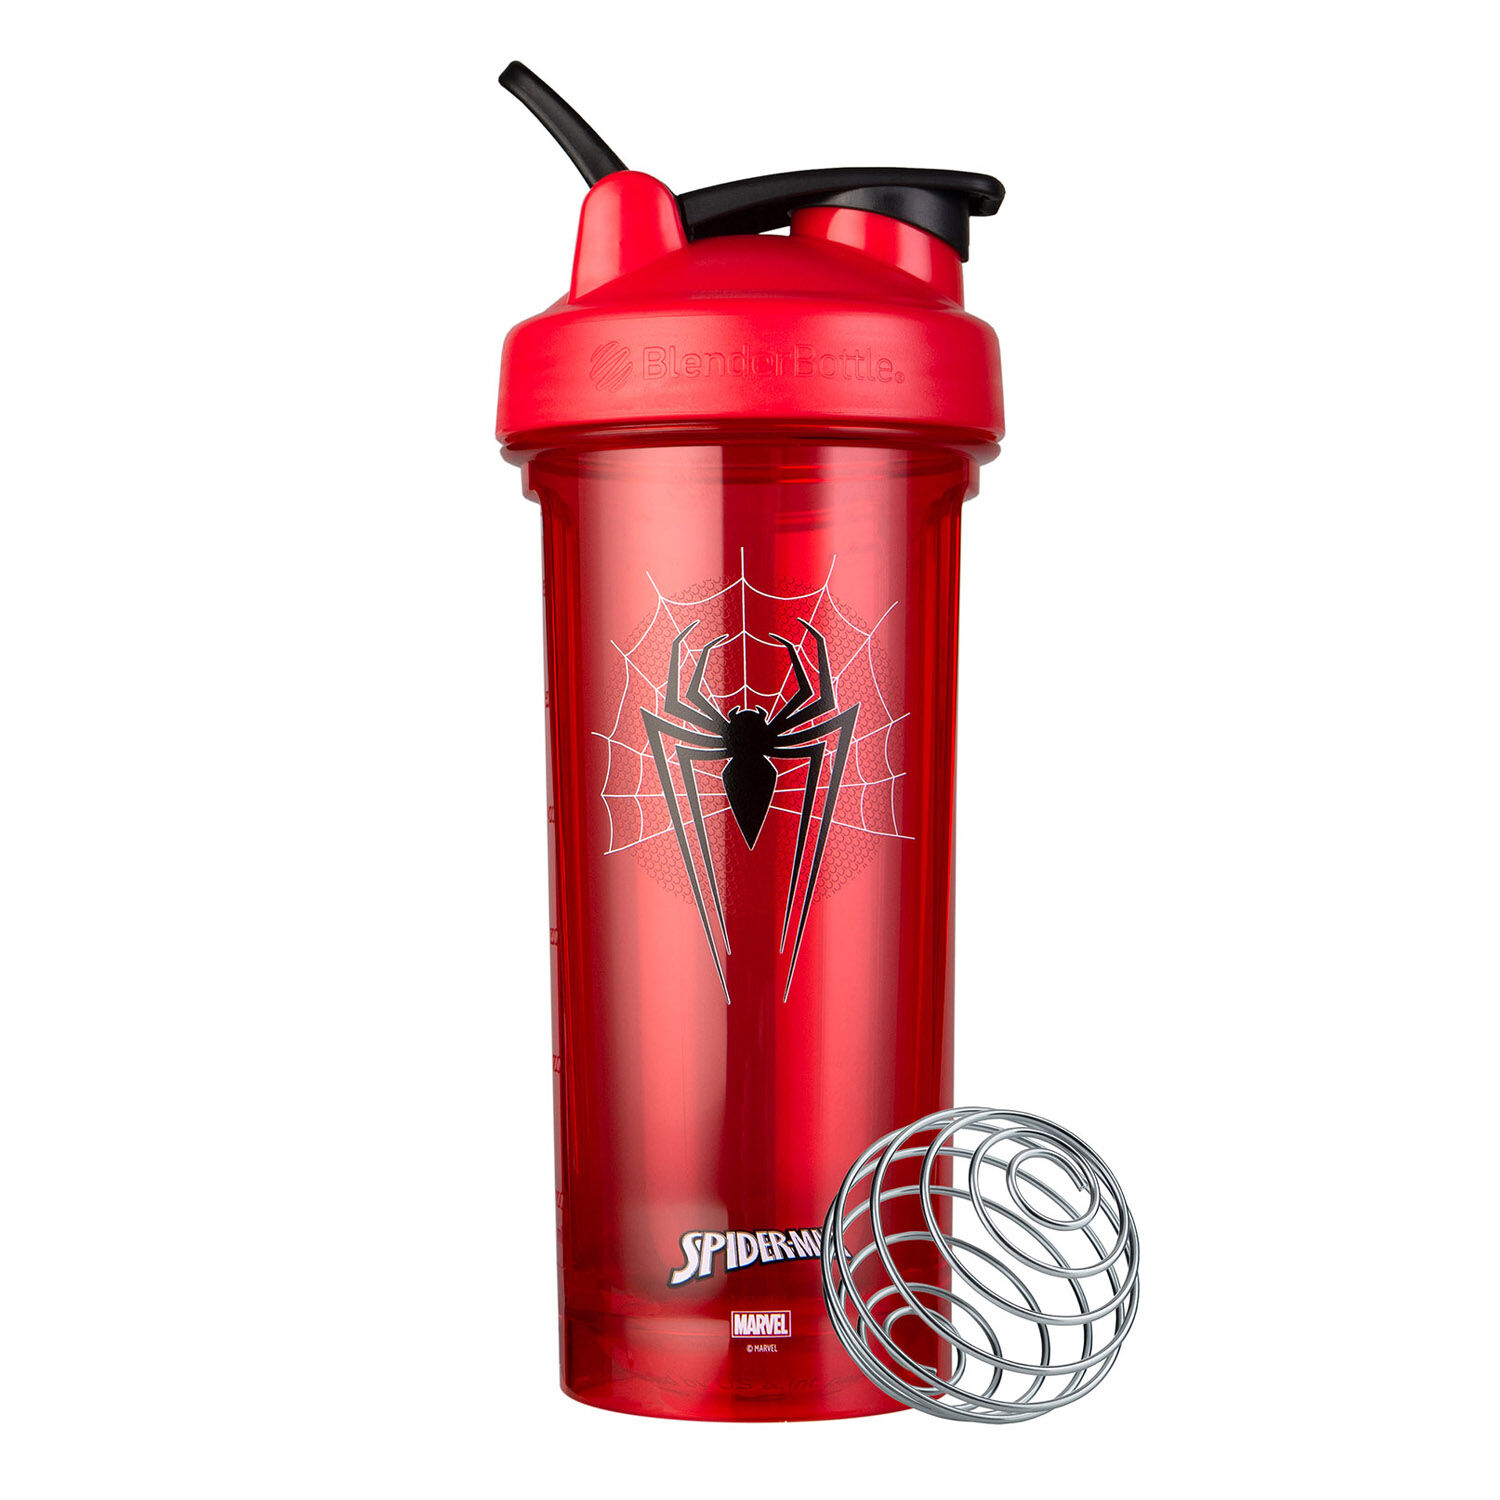 Pro 28&trade; Marvel Pro Series Protein Shaker Bottle - Spiderman - 1 Item  | GNC